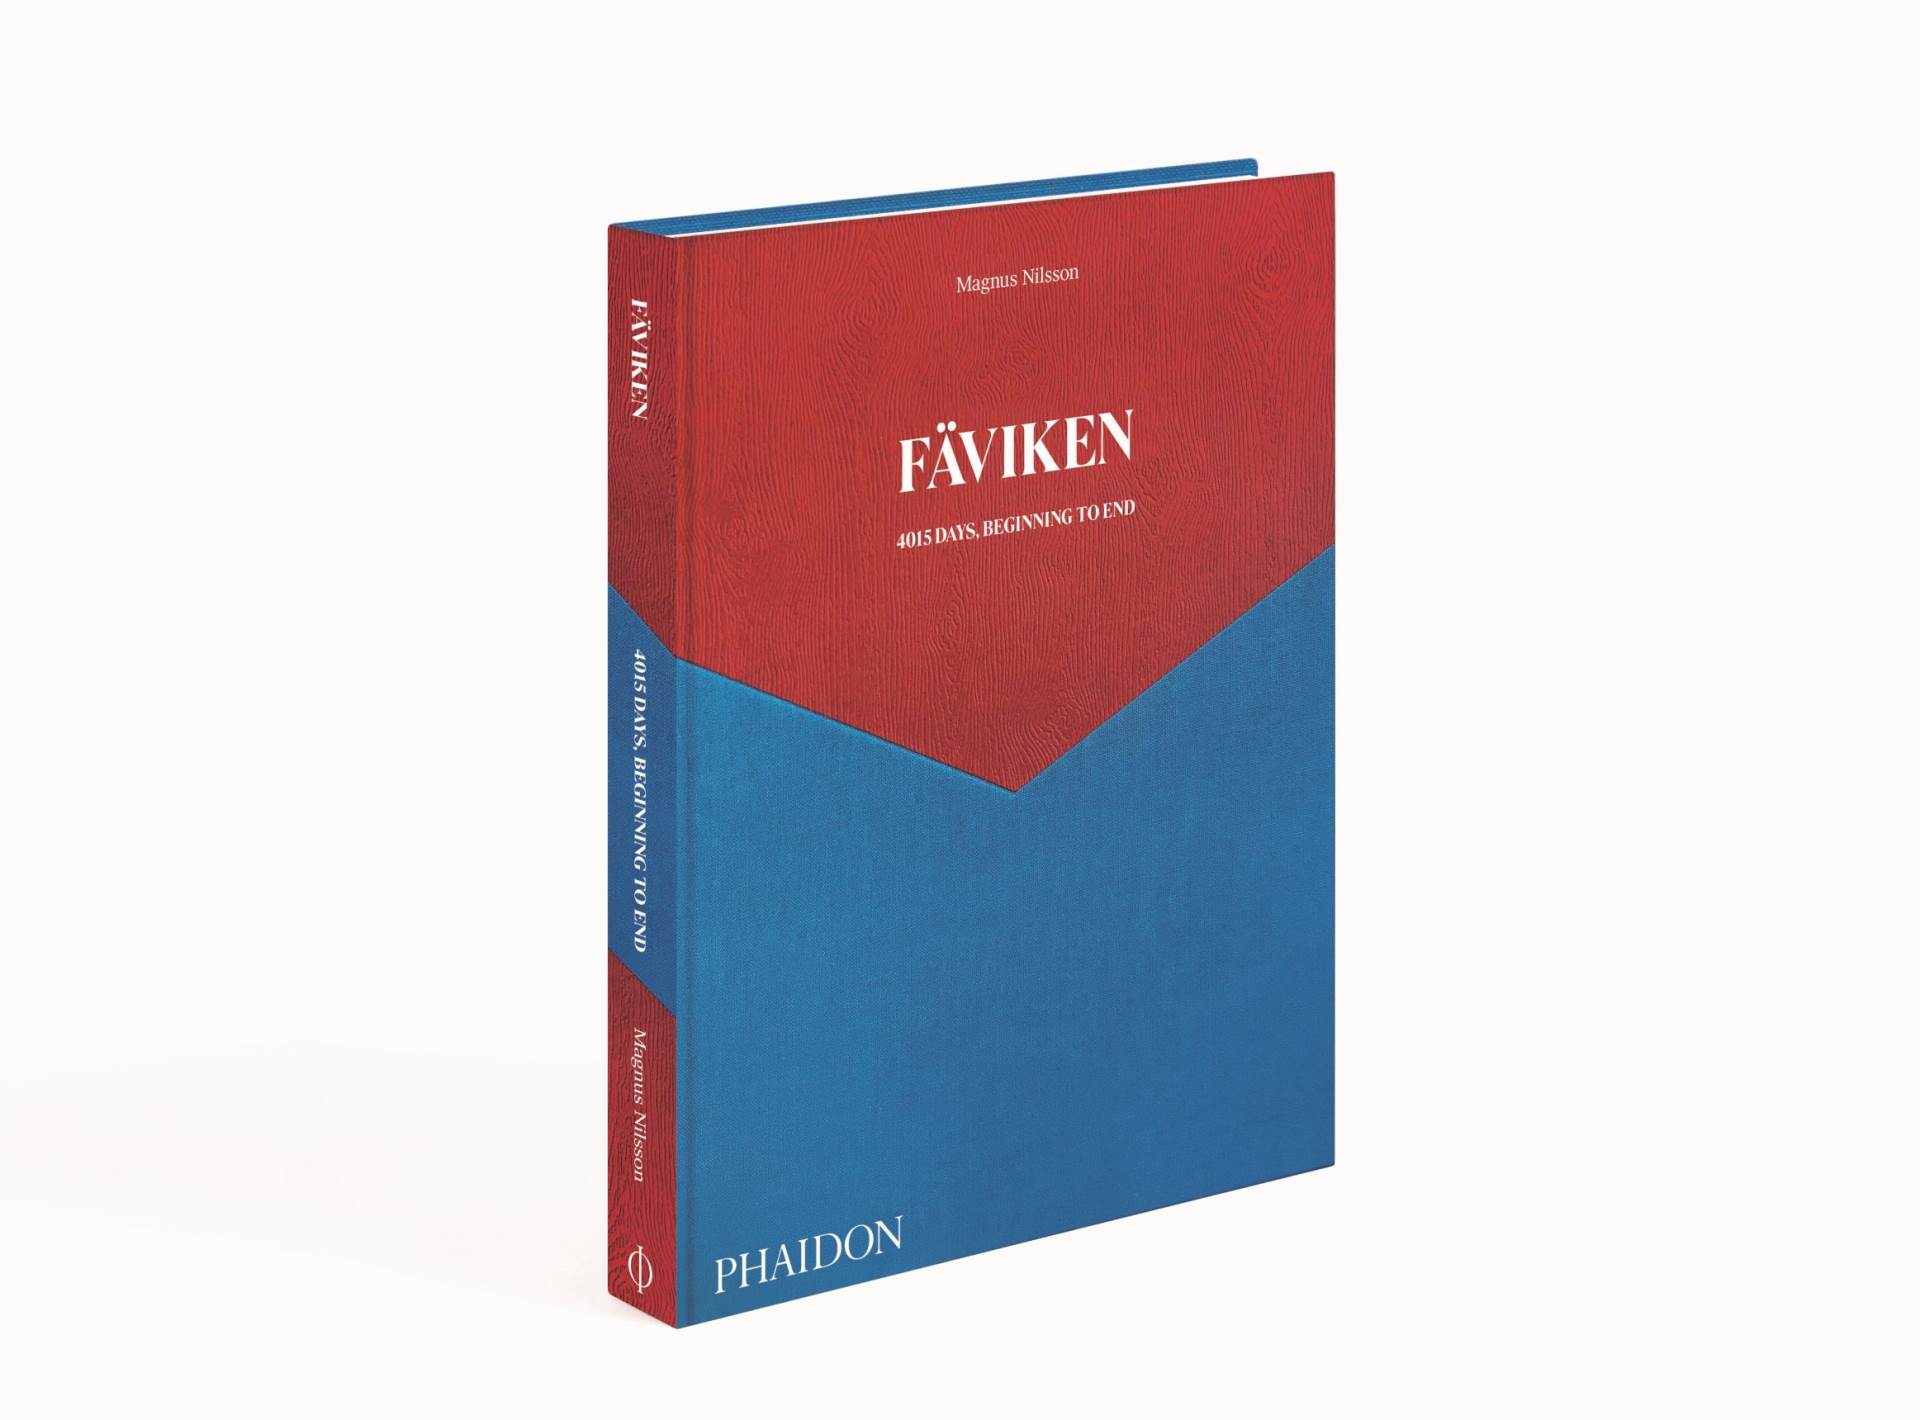 Više od knjige, “Faviken: 4015 Days, Beginning to End”